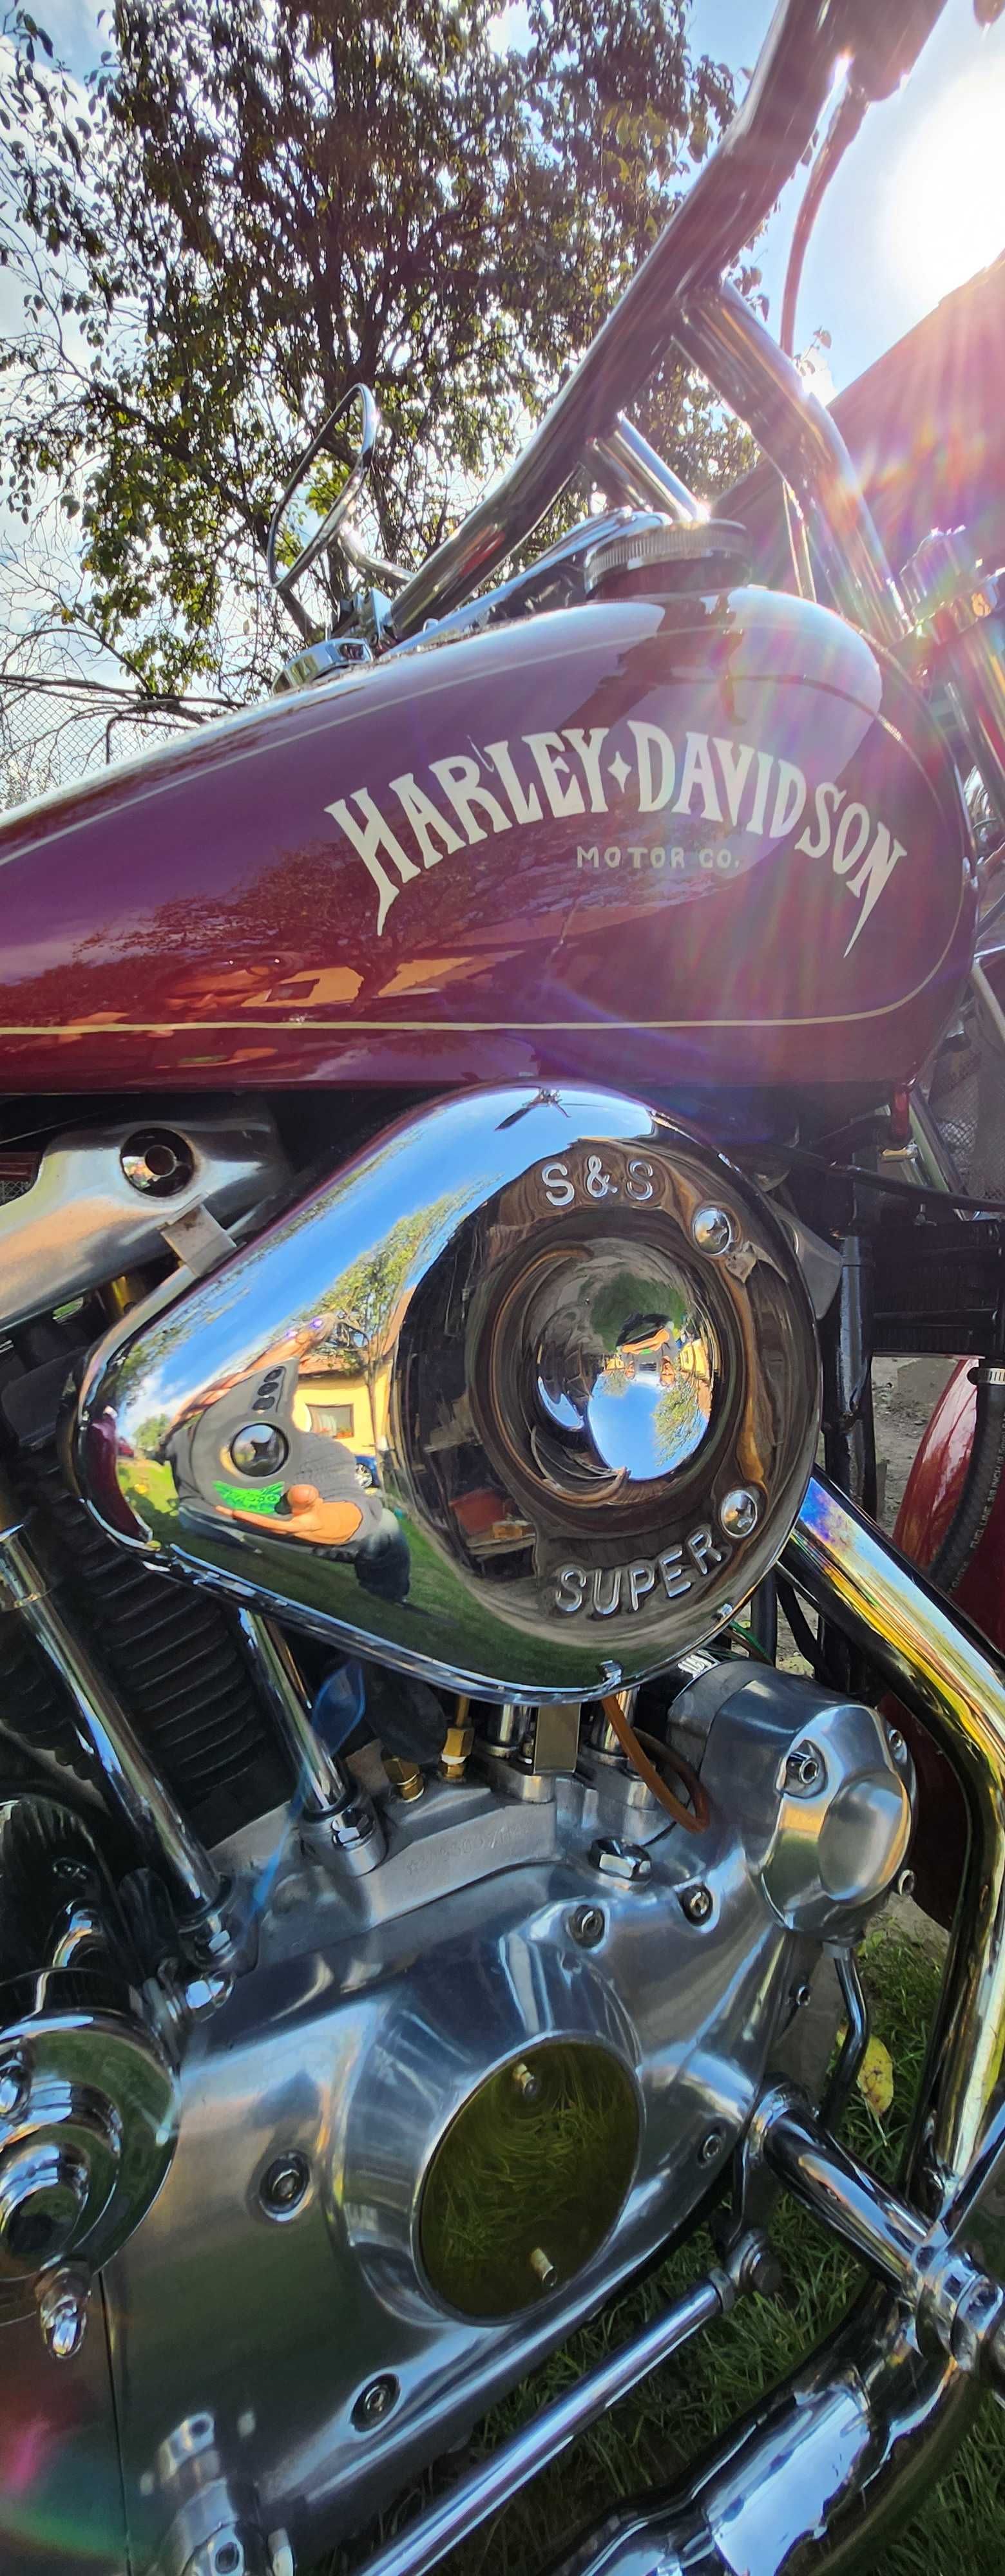 1974 Harley Davidson Sportster 1000